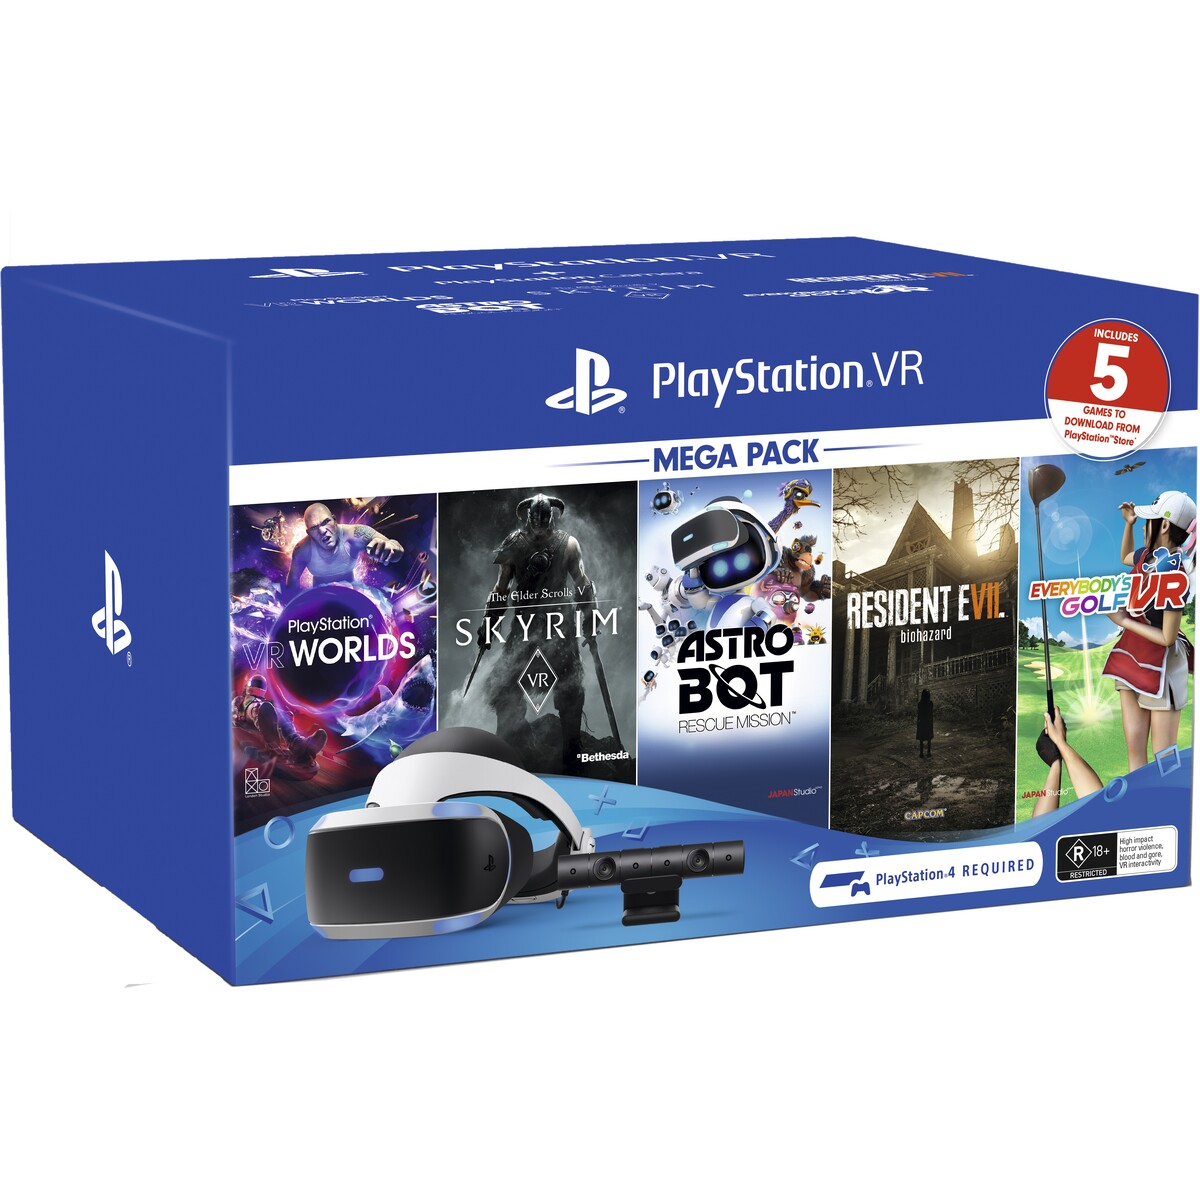 Casque VR Sony Playstation avec pack appareil photo, Maroc